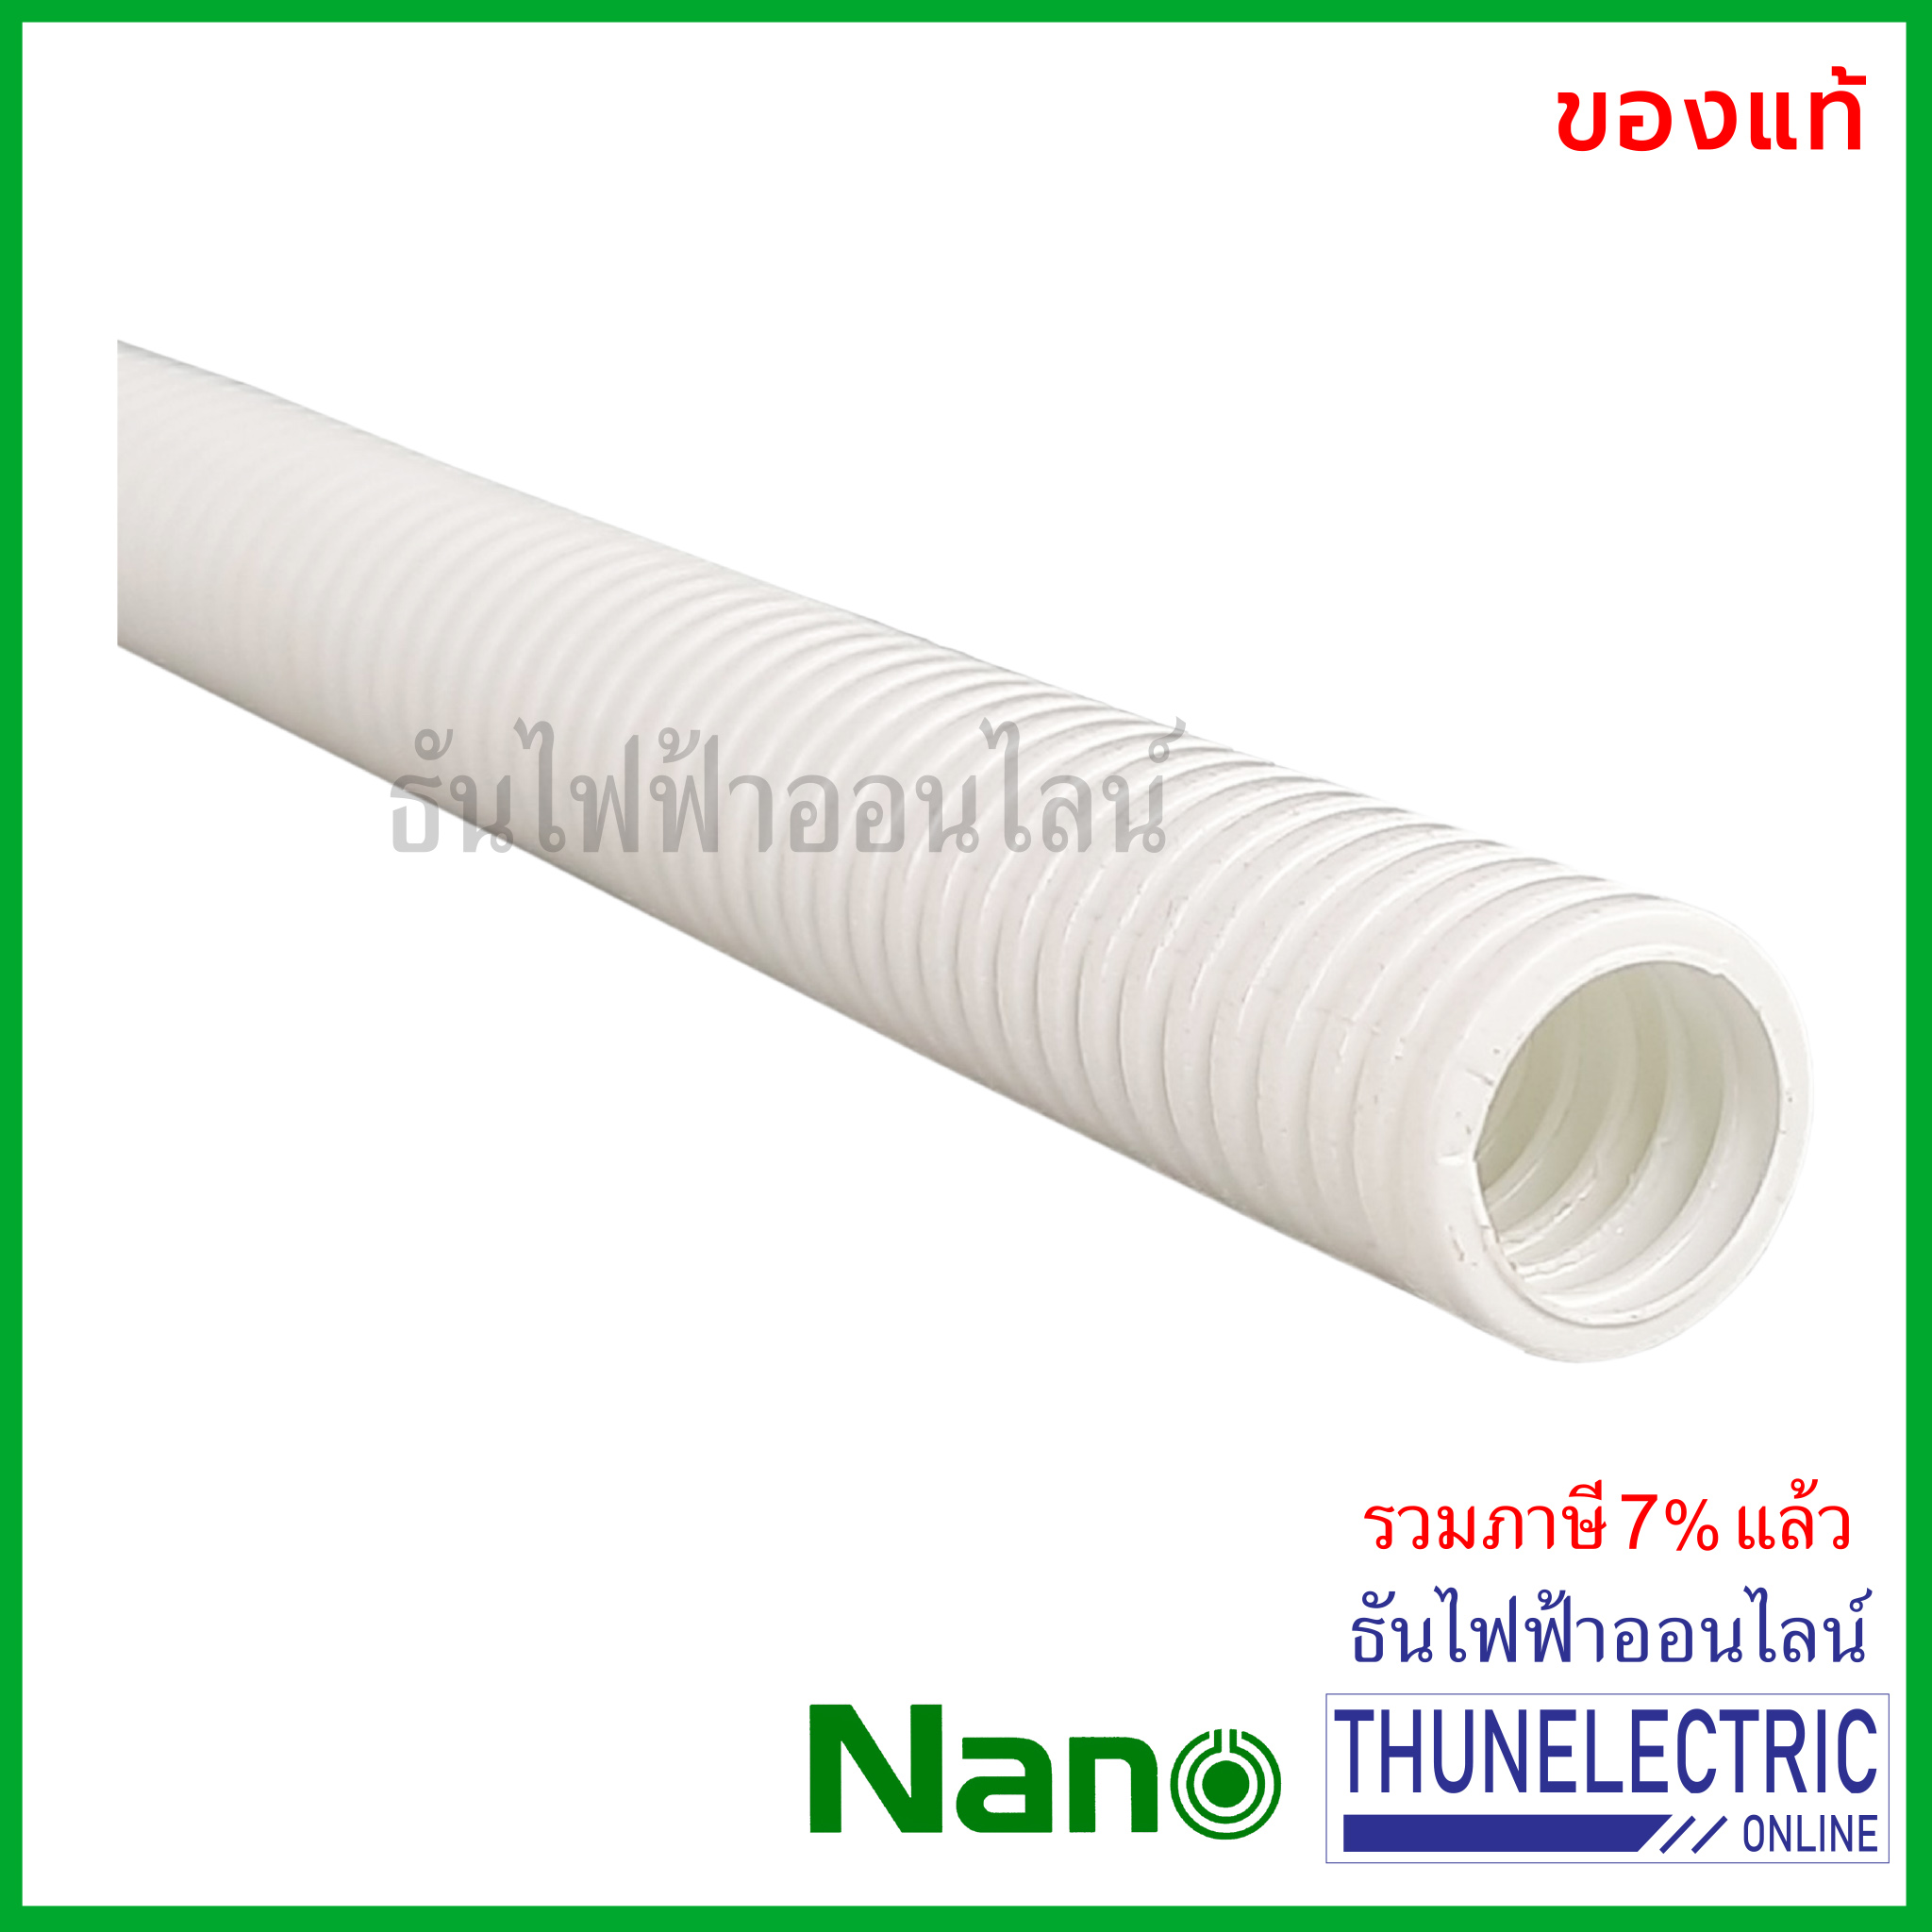 NANO ท่อลูกฟูก สีขาว ขนาด 16 mm ม้วน 50 m (NNCC16) ท่อย่น ท่ออ่อน ท่อเฟล็ก ท่อ flex pvc นาโน ธันไฟฟ้า